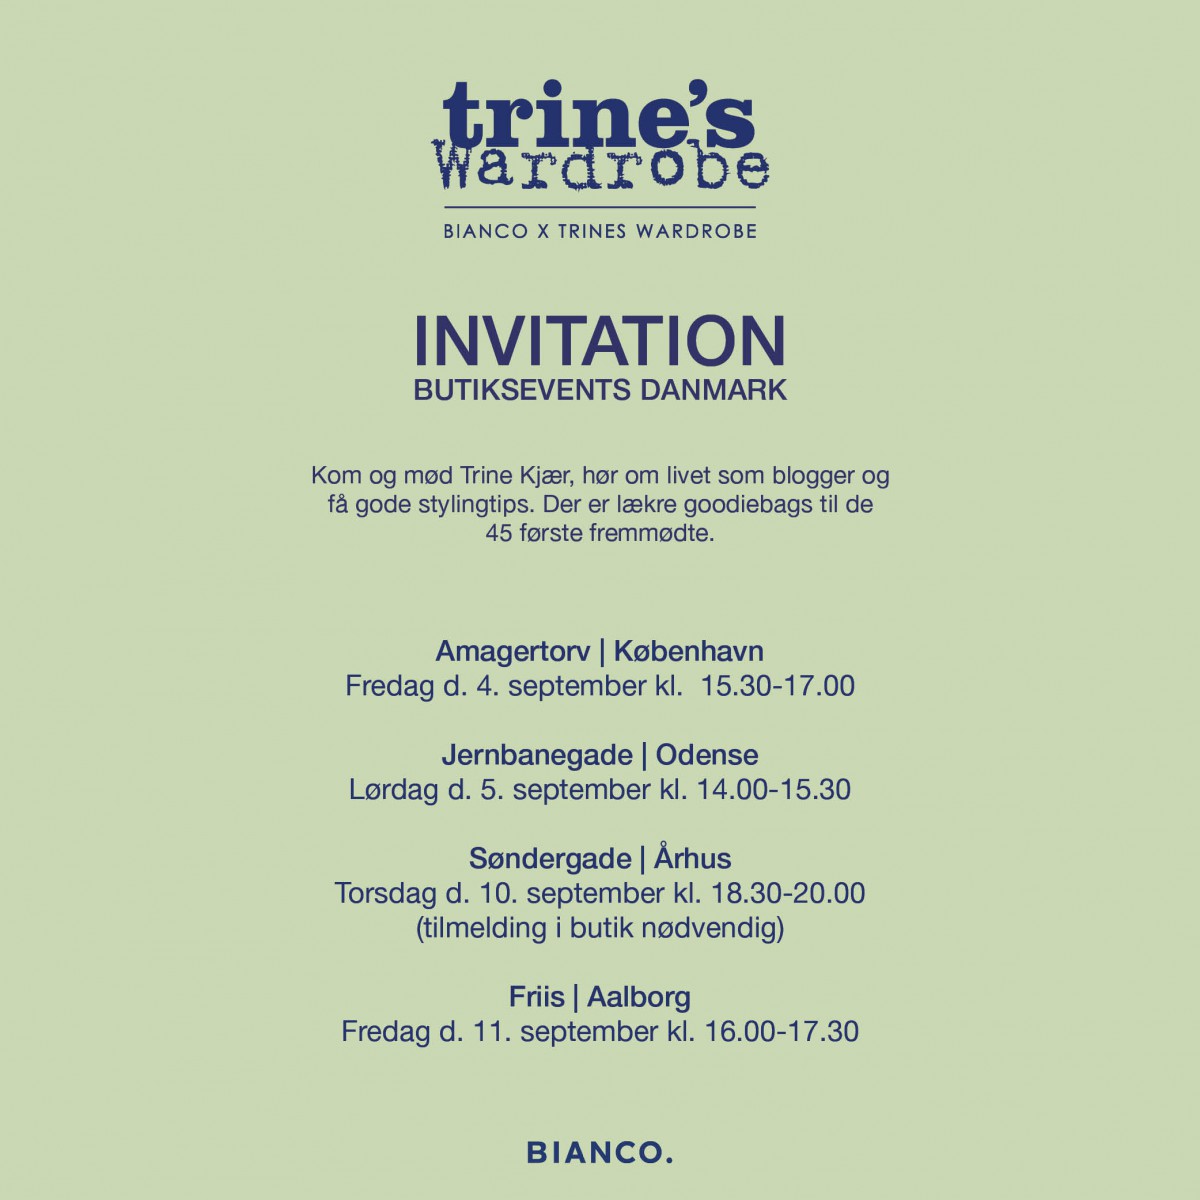 spørgeskema to uger Medicinsk Bianco x Trine's Wardrobe Event Invitation - Trine Kjær